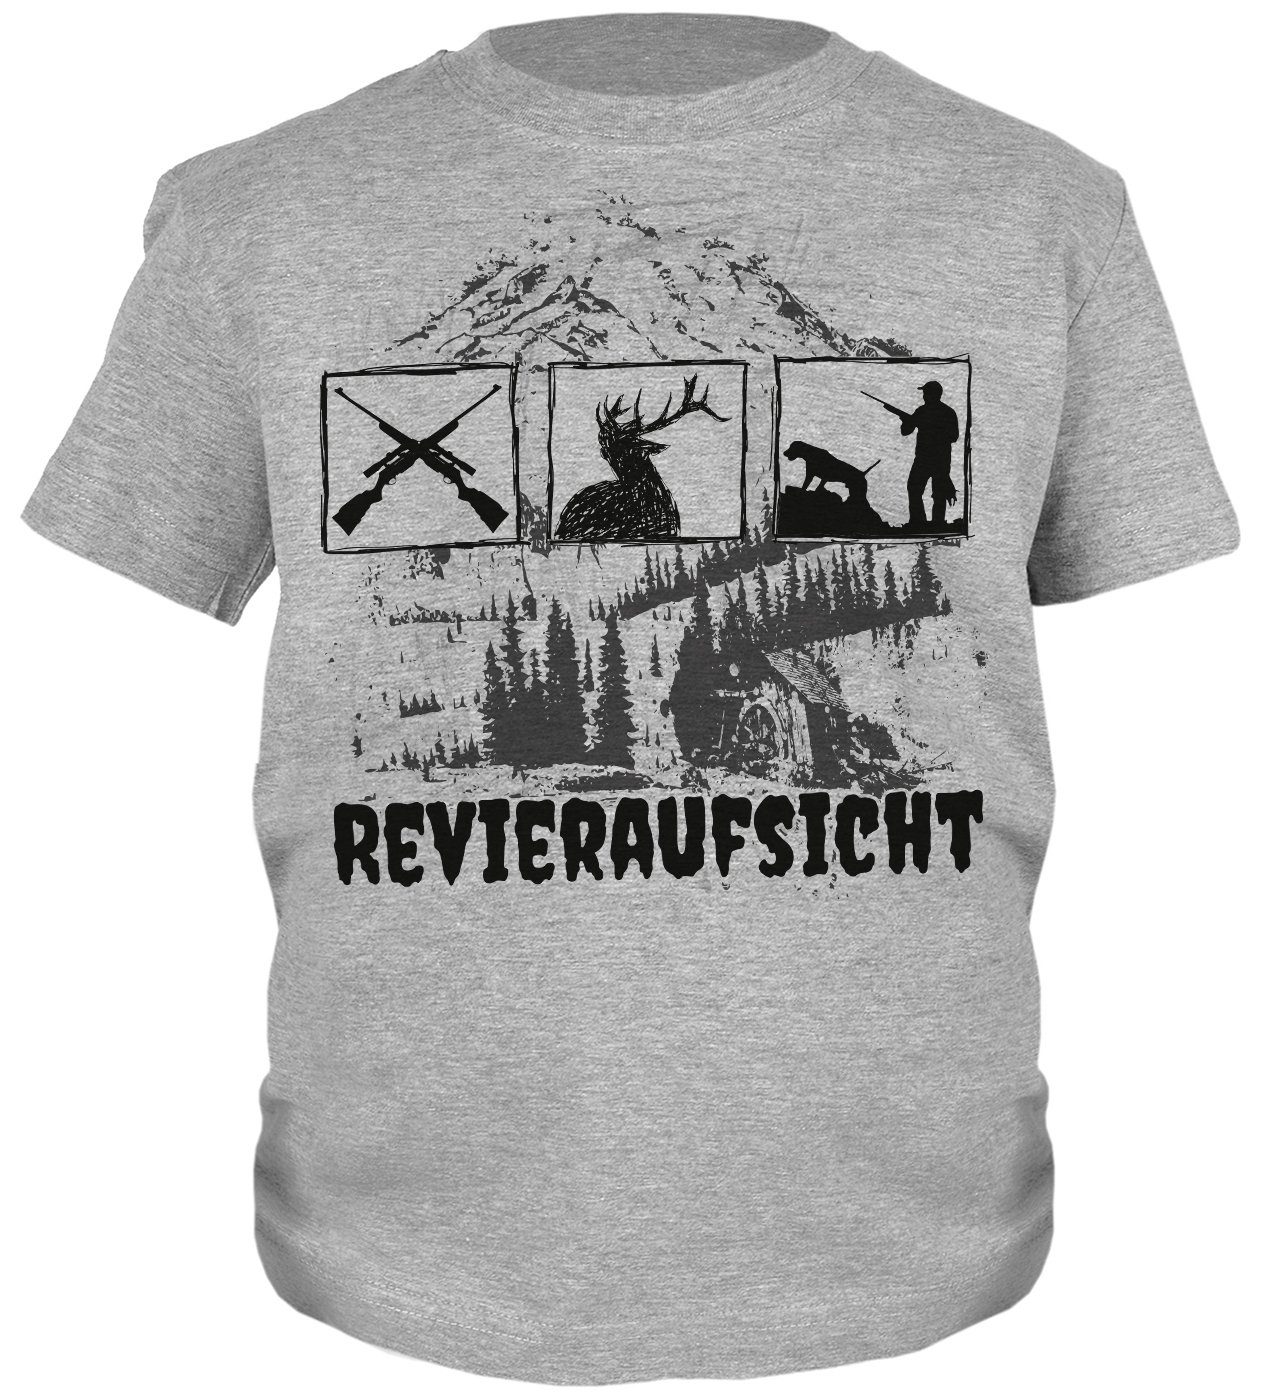 - Jäger Tini Hirsch Shirt : T-Shirt Revieraufsicht Jagdmotiv Kinder Shirts Kind